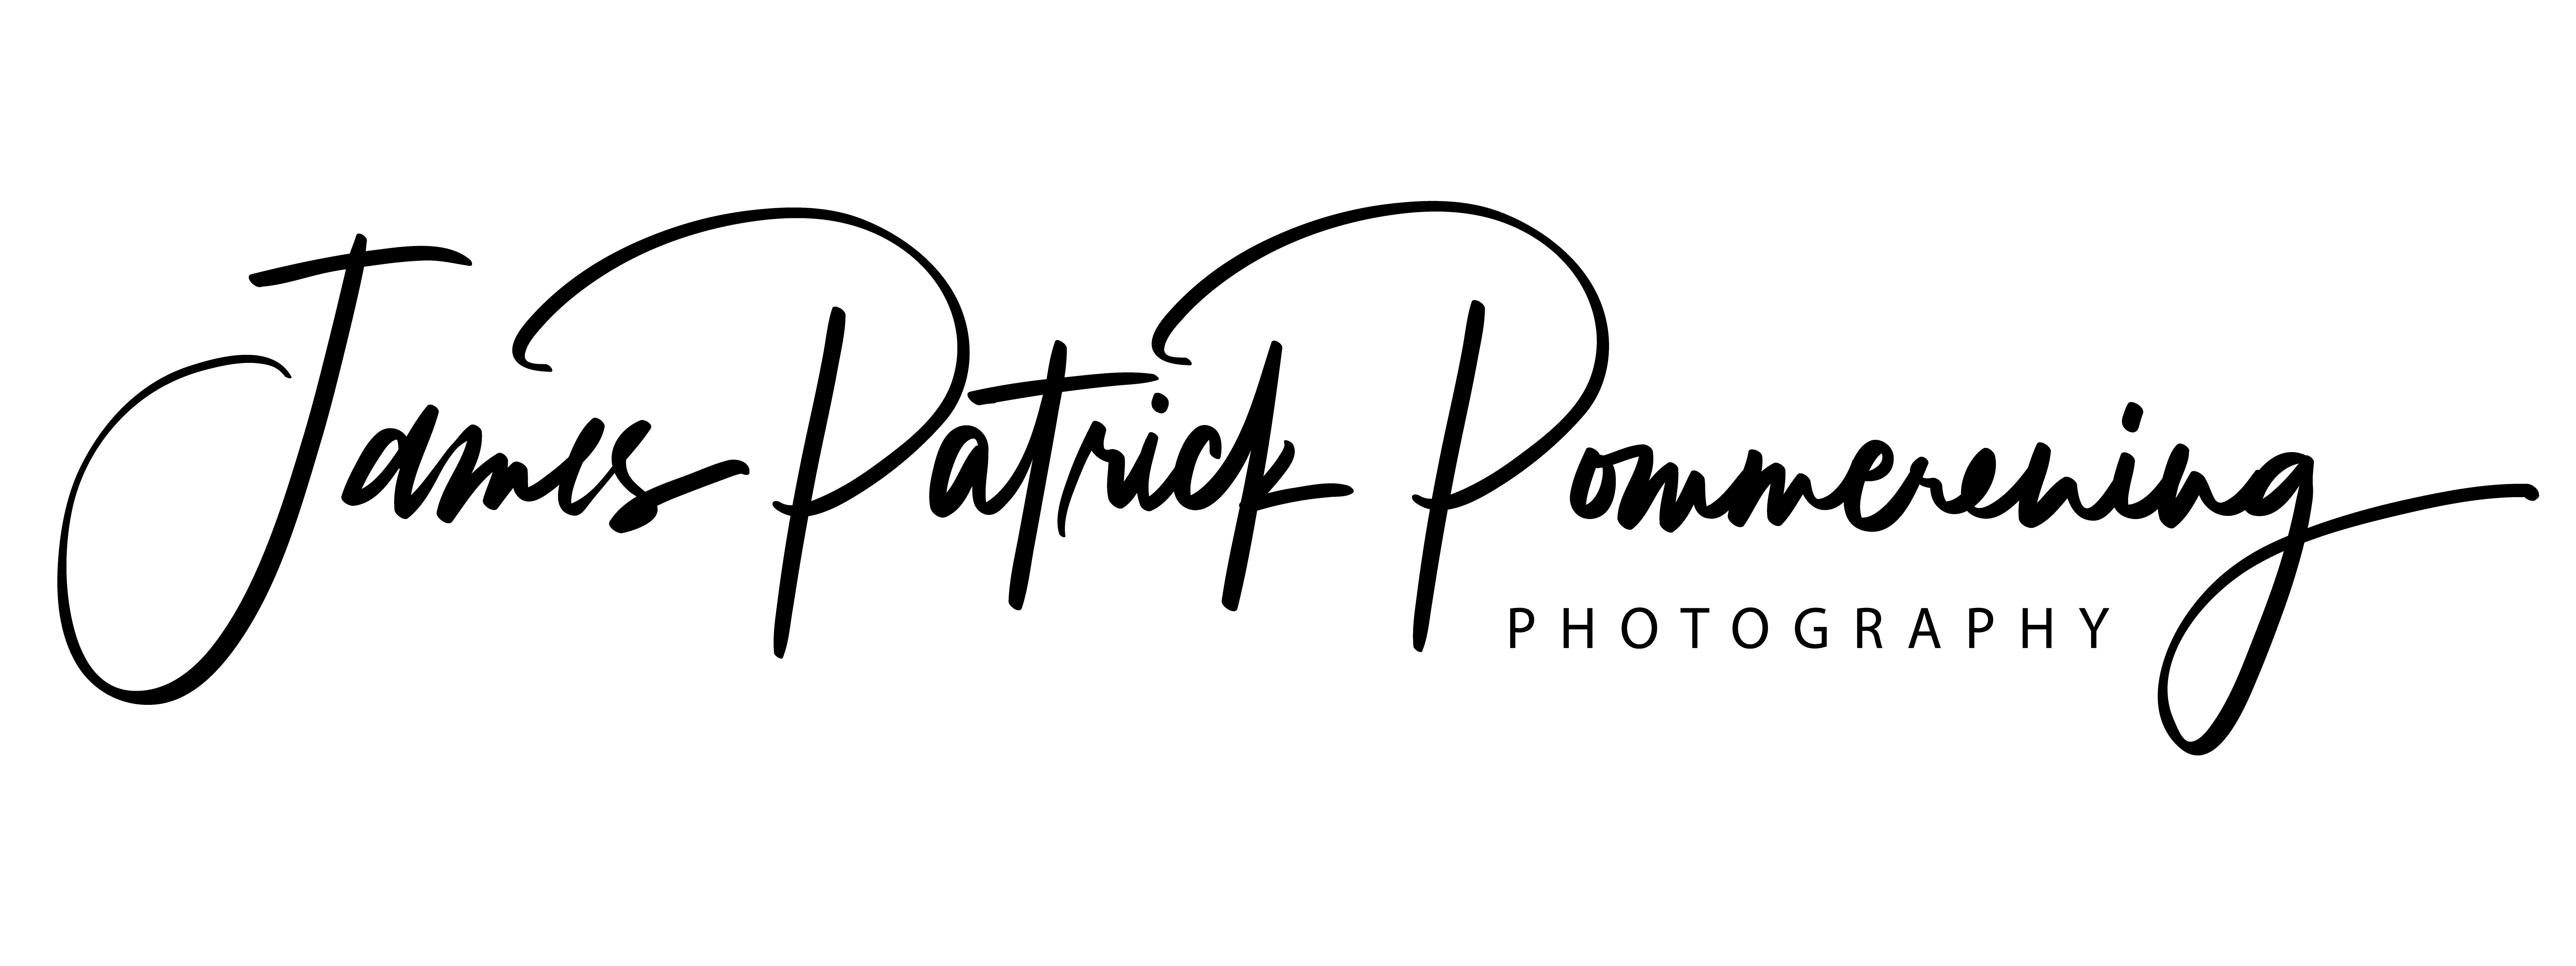 James Patrick Pommerening Photography